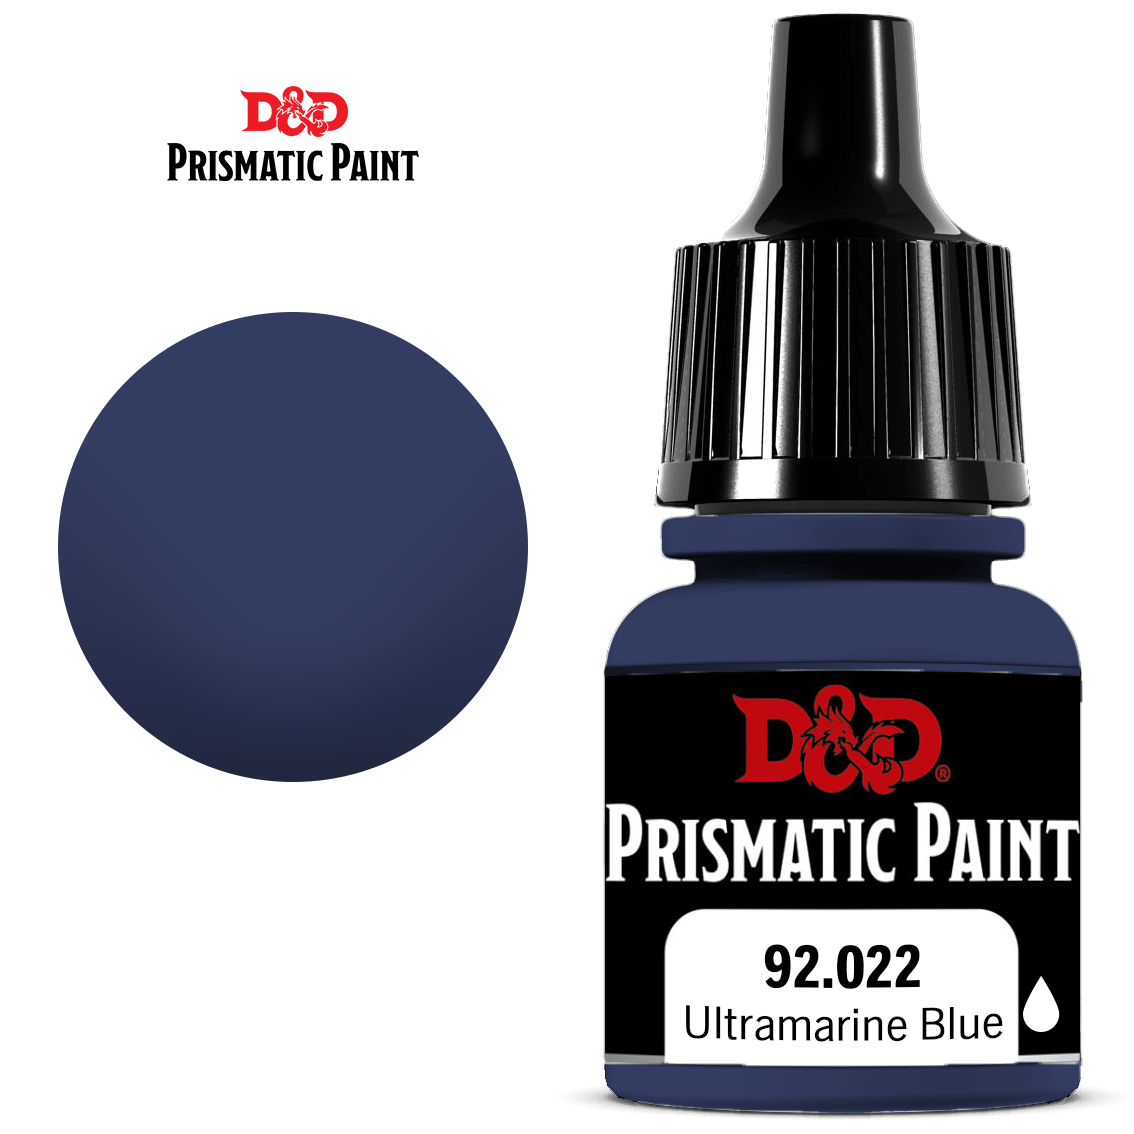 PRISMATIC PAINT: ULTRAMARINE BLUE | BD Cosmos